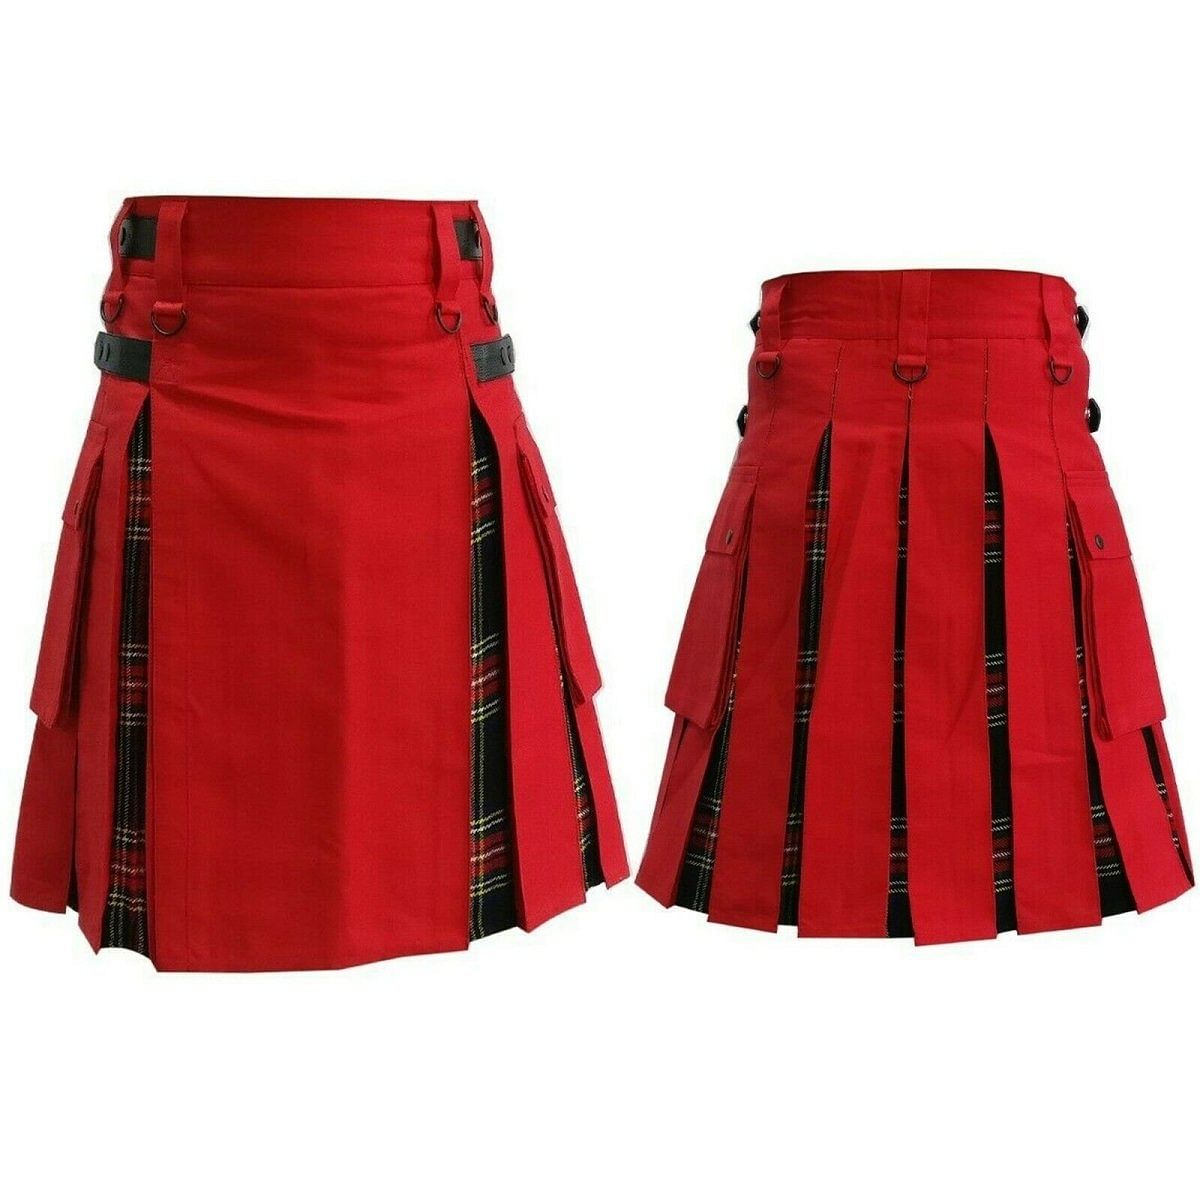 Men's handmade Red/Black Deluxe Utility Fashion Kilt 100% Cotton ALL SIZES. 